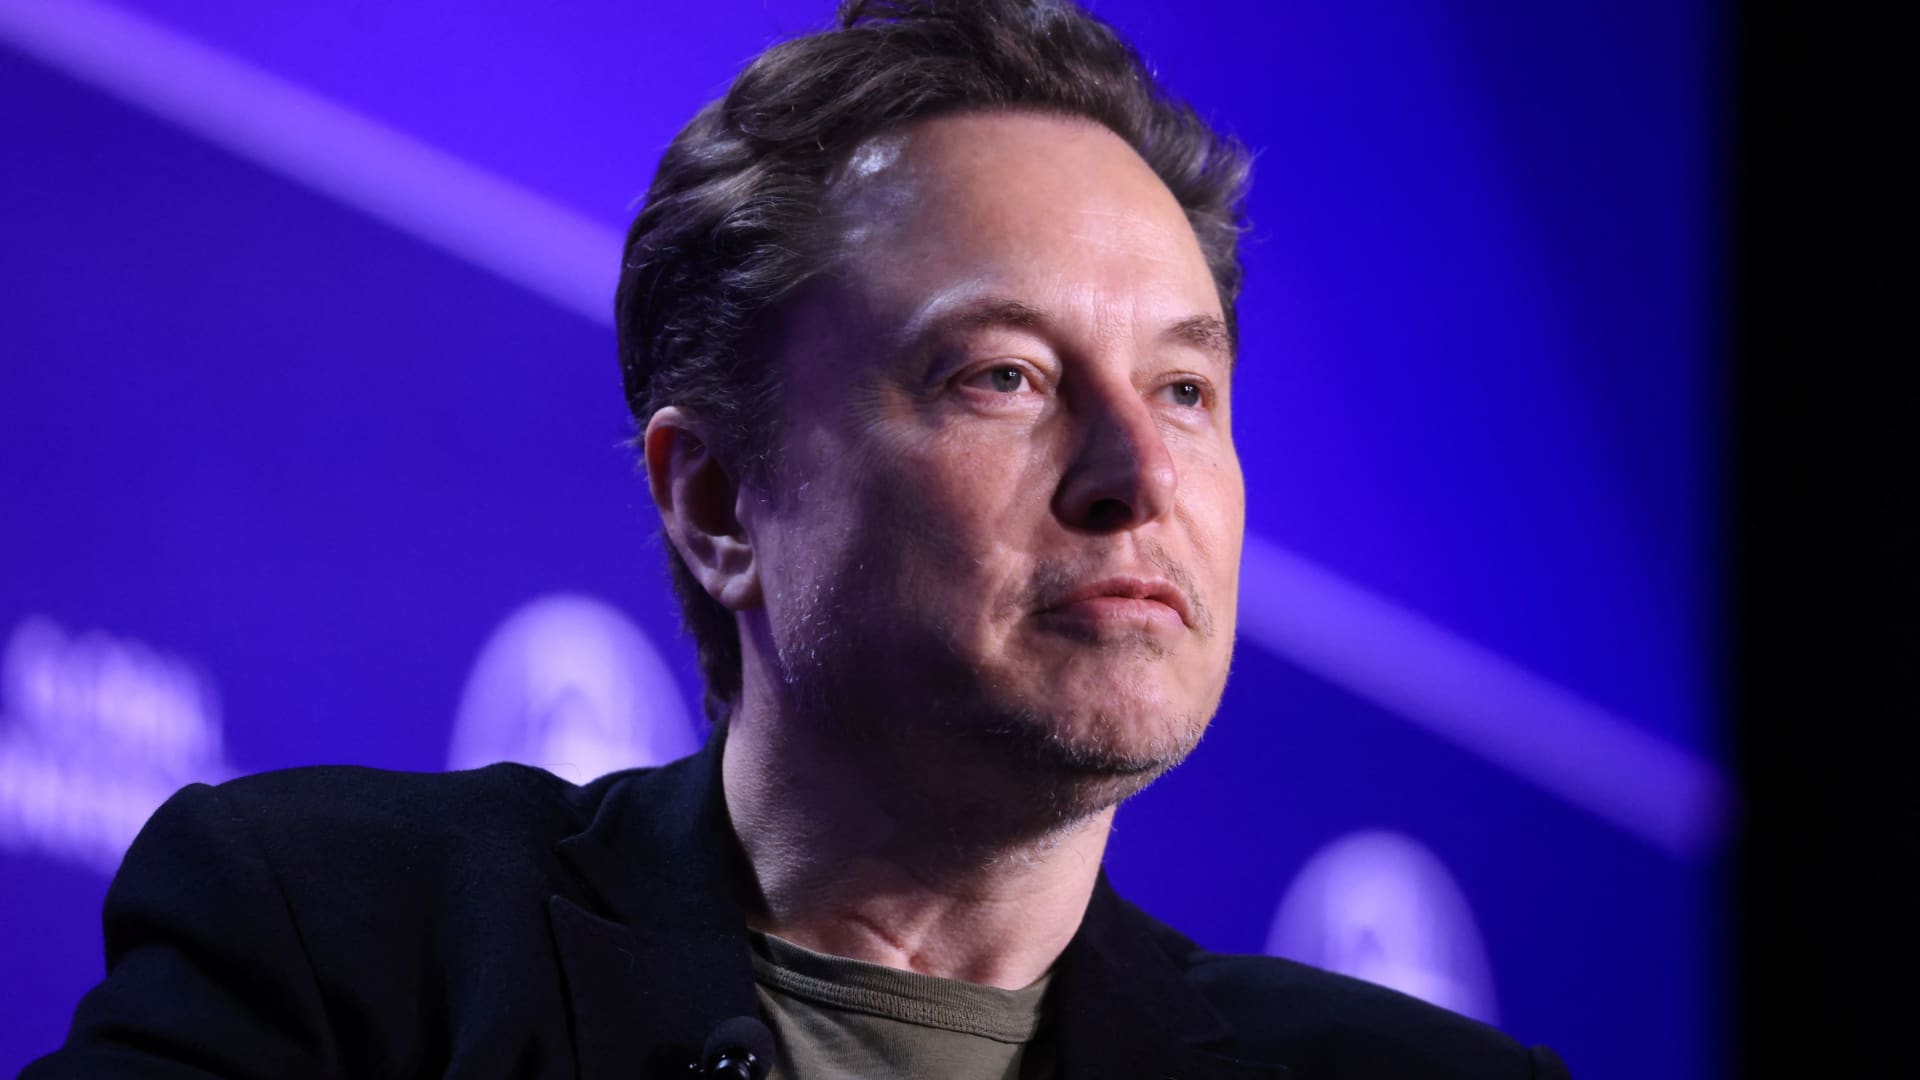 Tesla shareholder vote on Musk's pay plan won't resolve 'legal disputes'